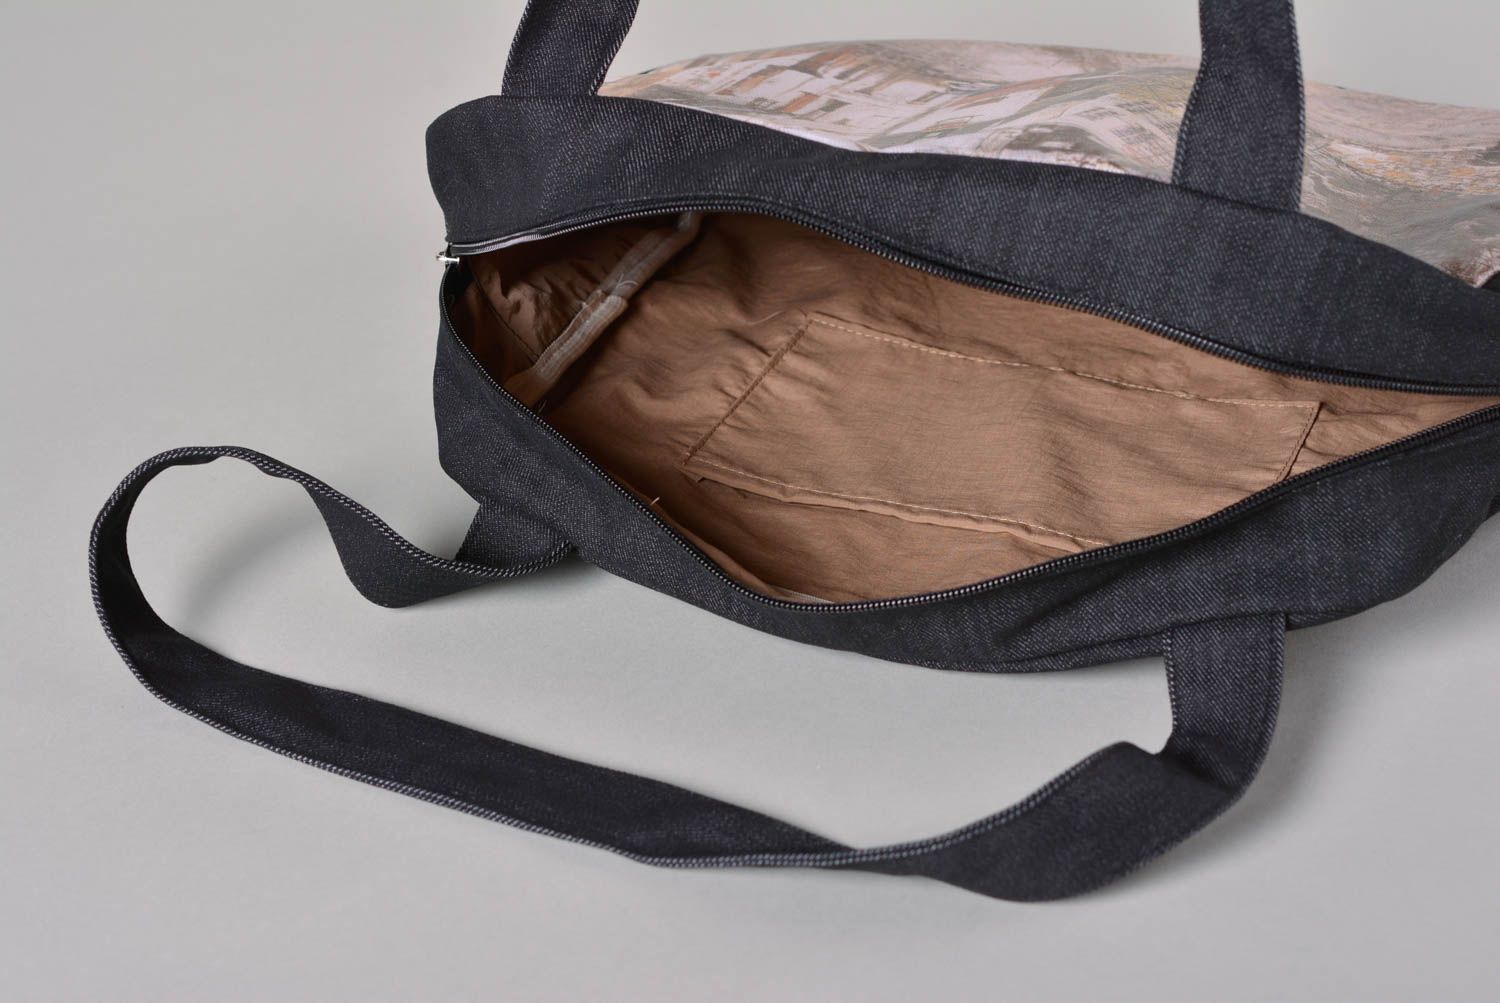 Small handmade fabric bag stylish handbag shoulder bag accessories for girls photo 4